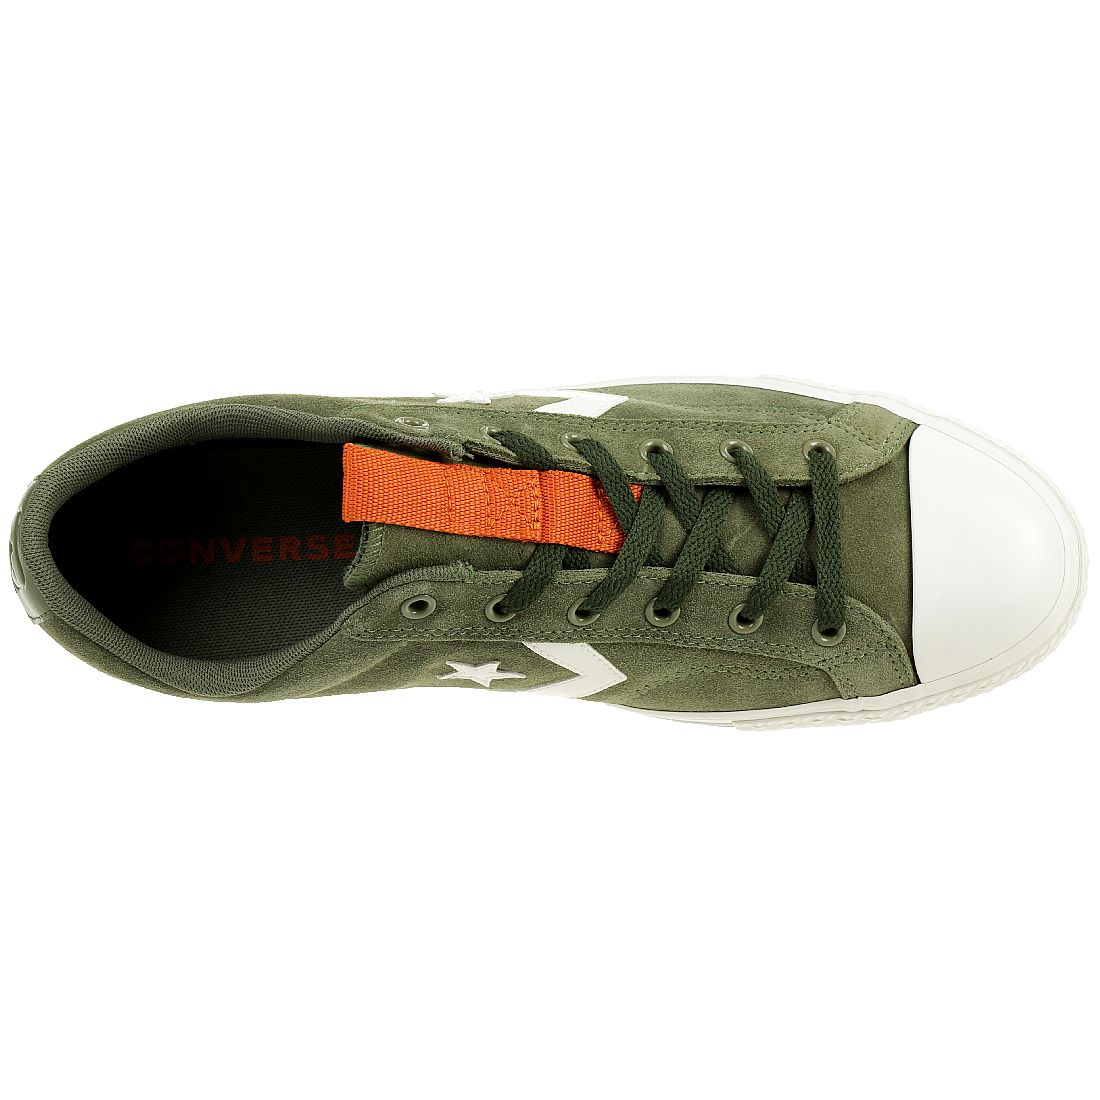 Converse STAR PLAYER OX Schuhe Sneaker Wildleder grün 162568C